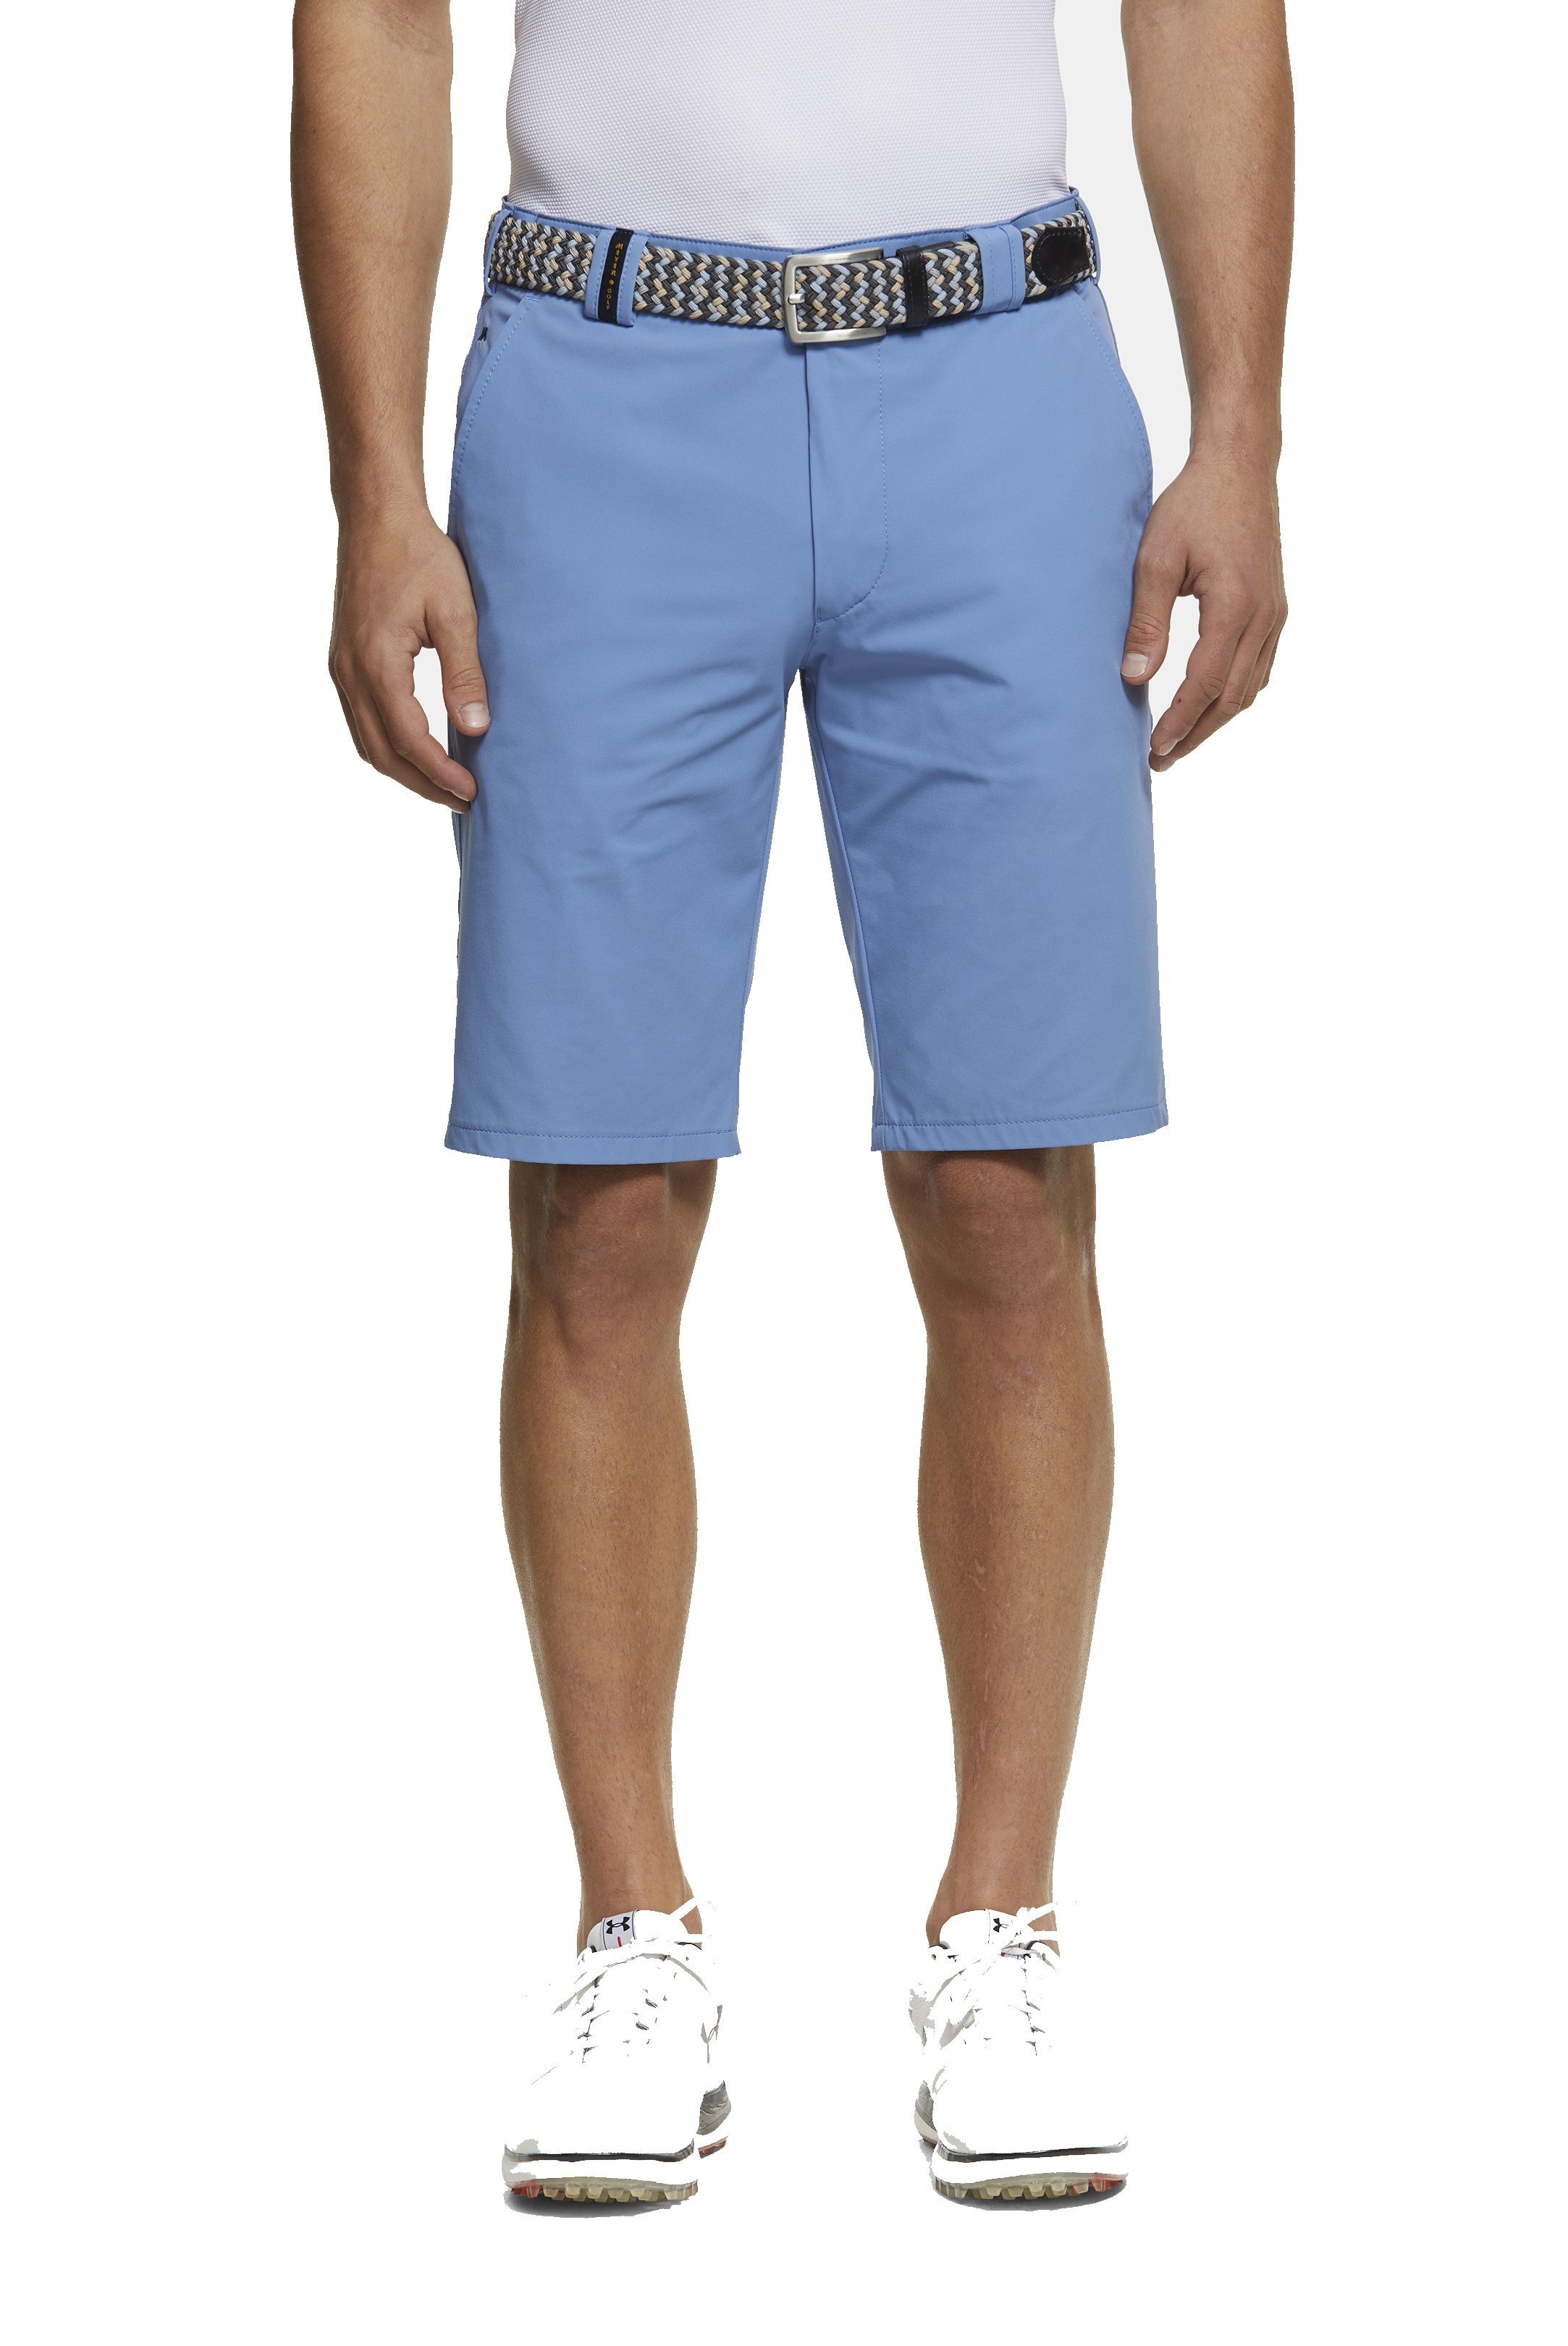 Meyer St Andrews Golf Shorts Light Blue